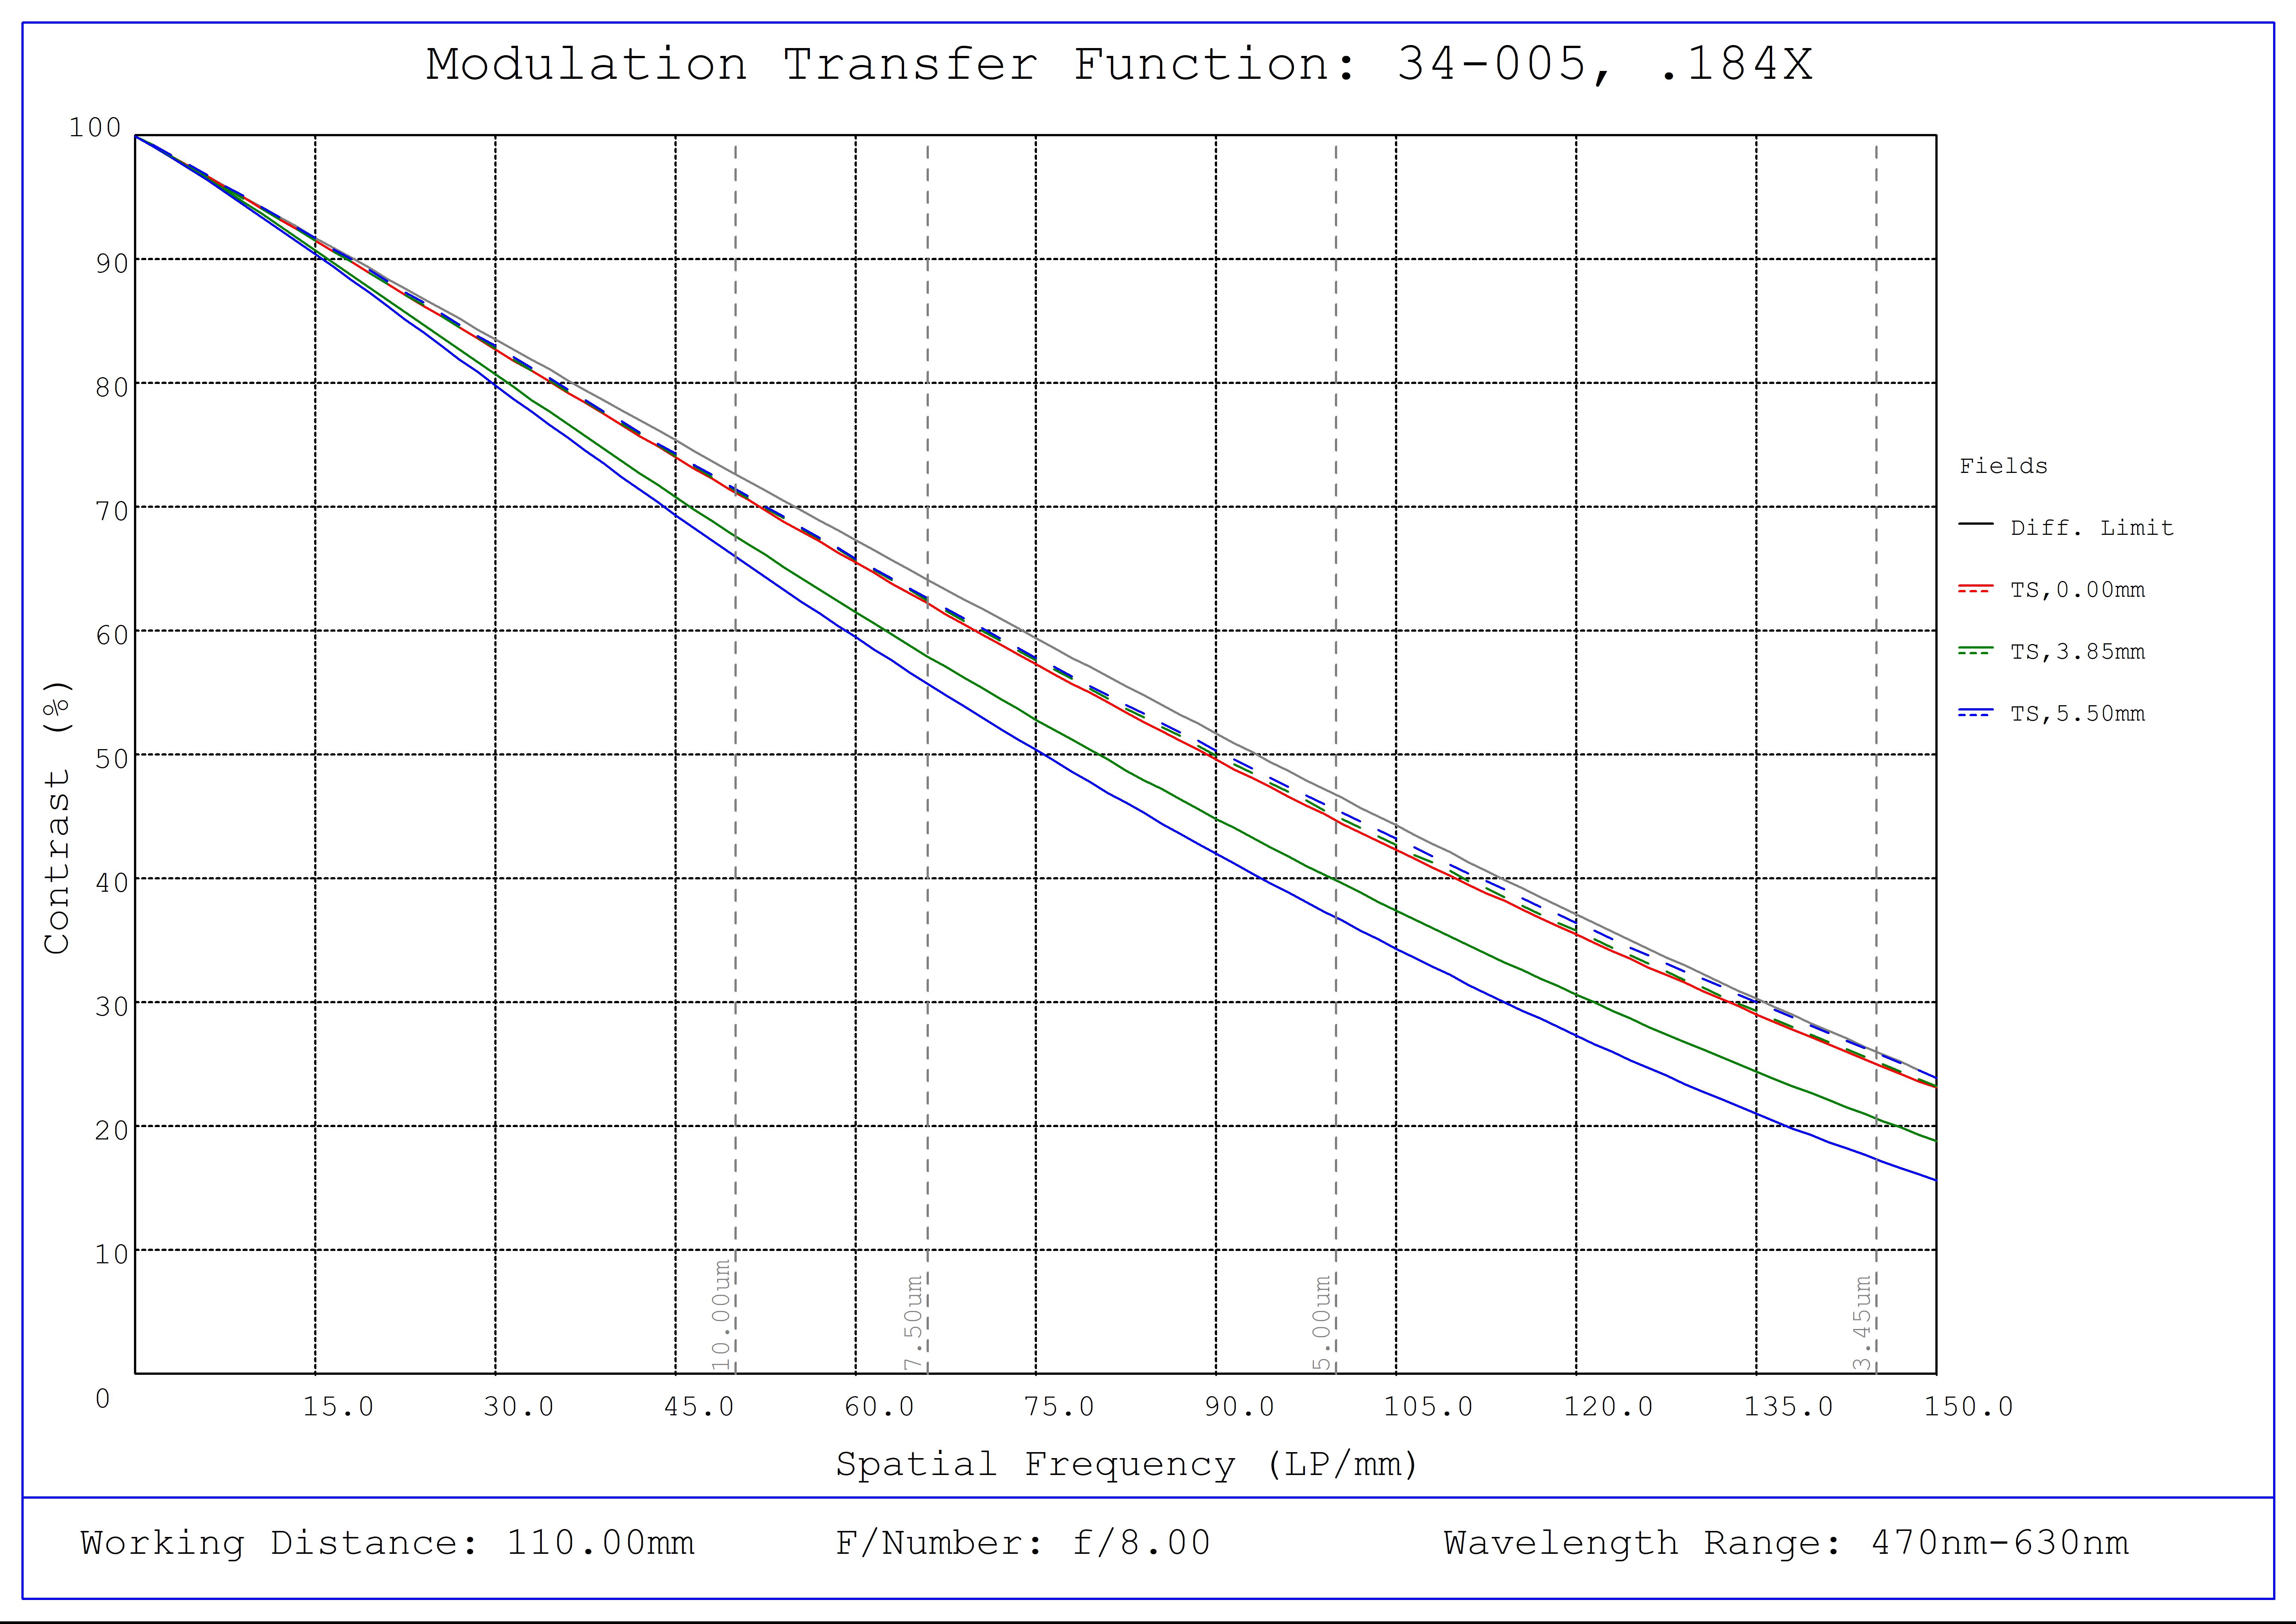 #34-005, 0.184X, 2/3" C-Mount TitanTL® Telecentric Lens, Modulated Transfer Function (MTF) Plot, 110mm Working Distance, f8